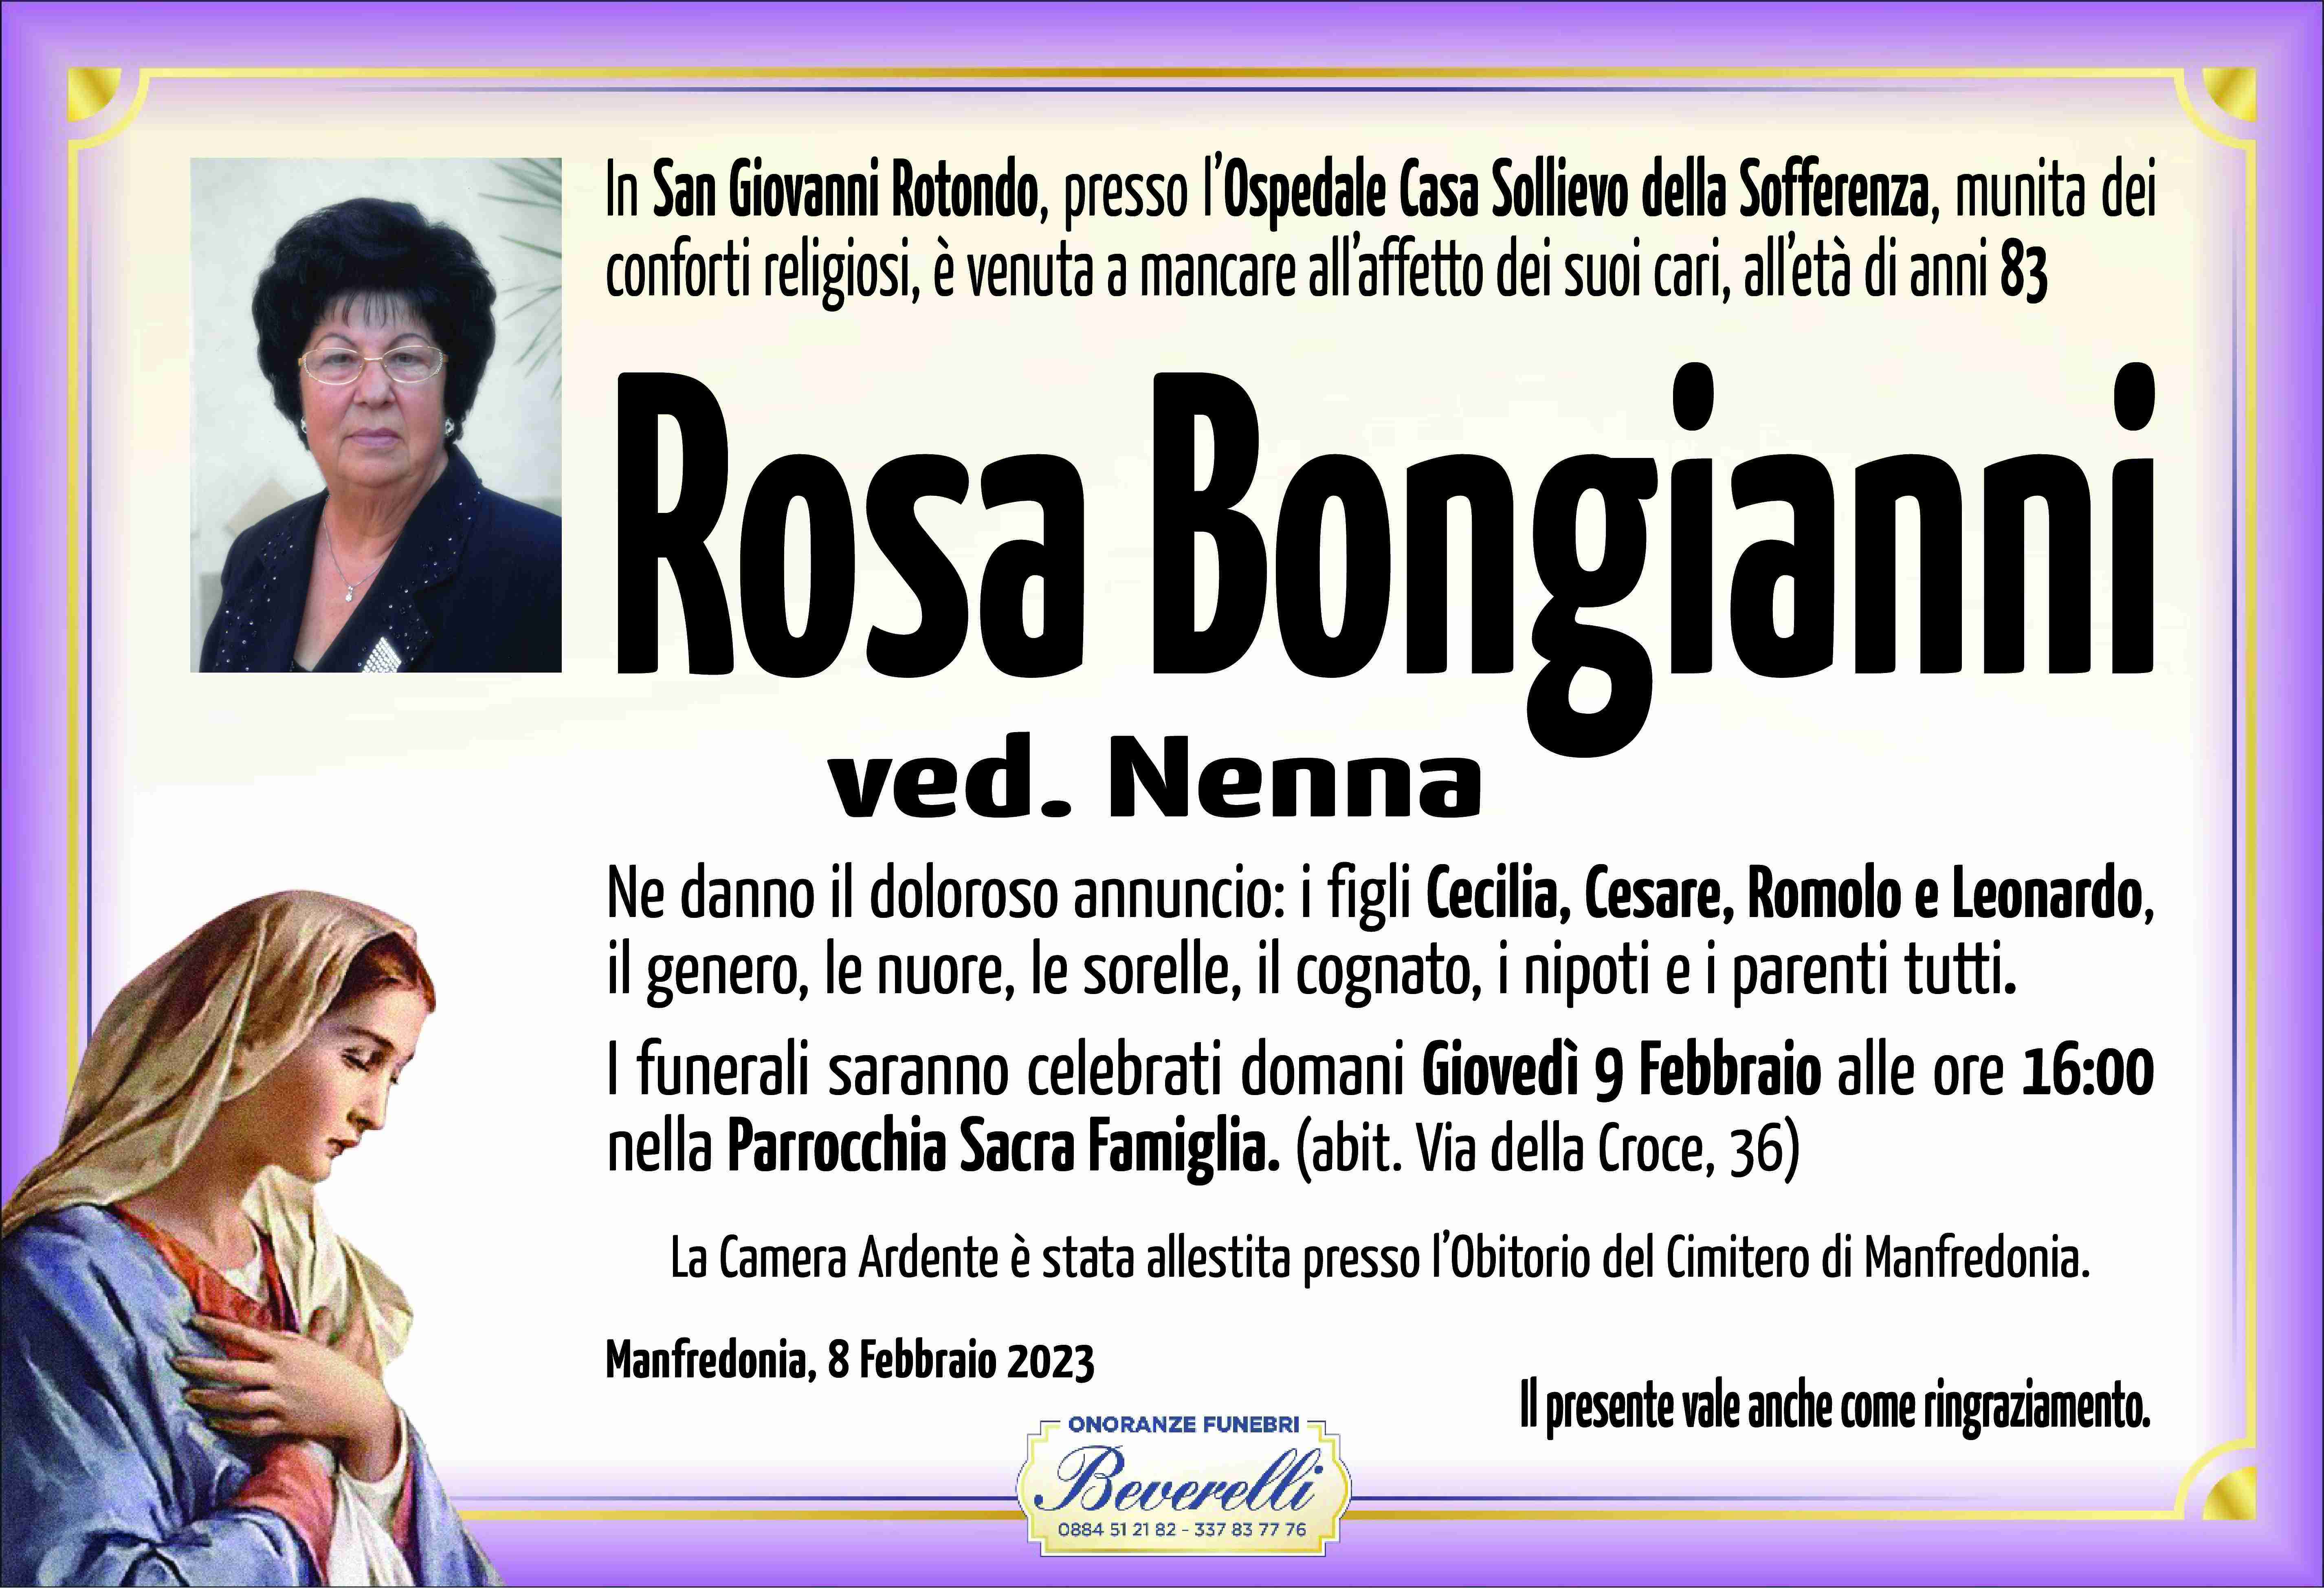 Rosa Bongianni